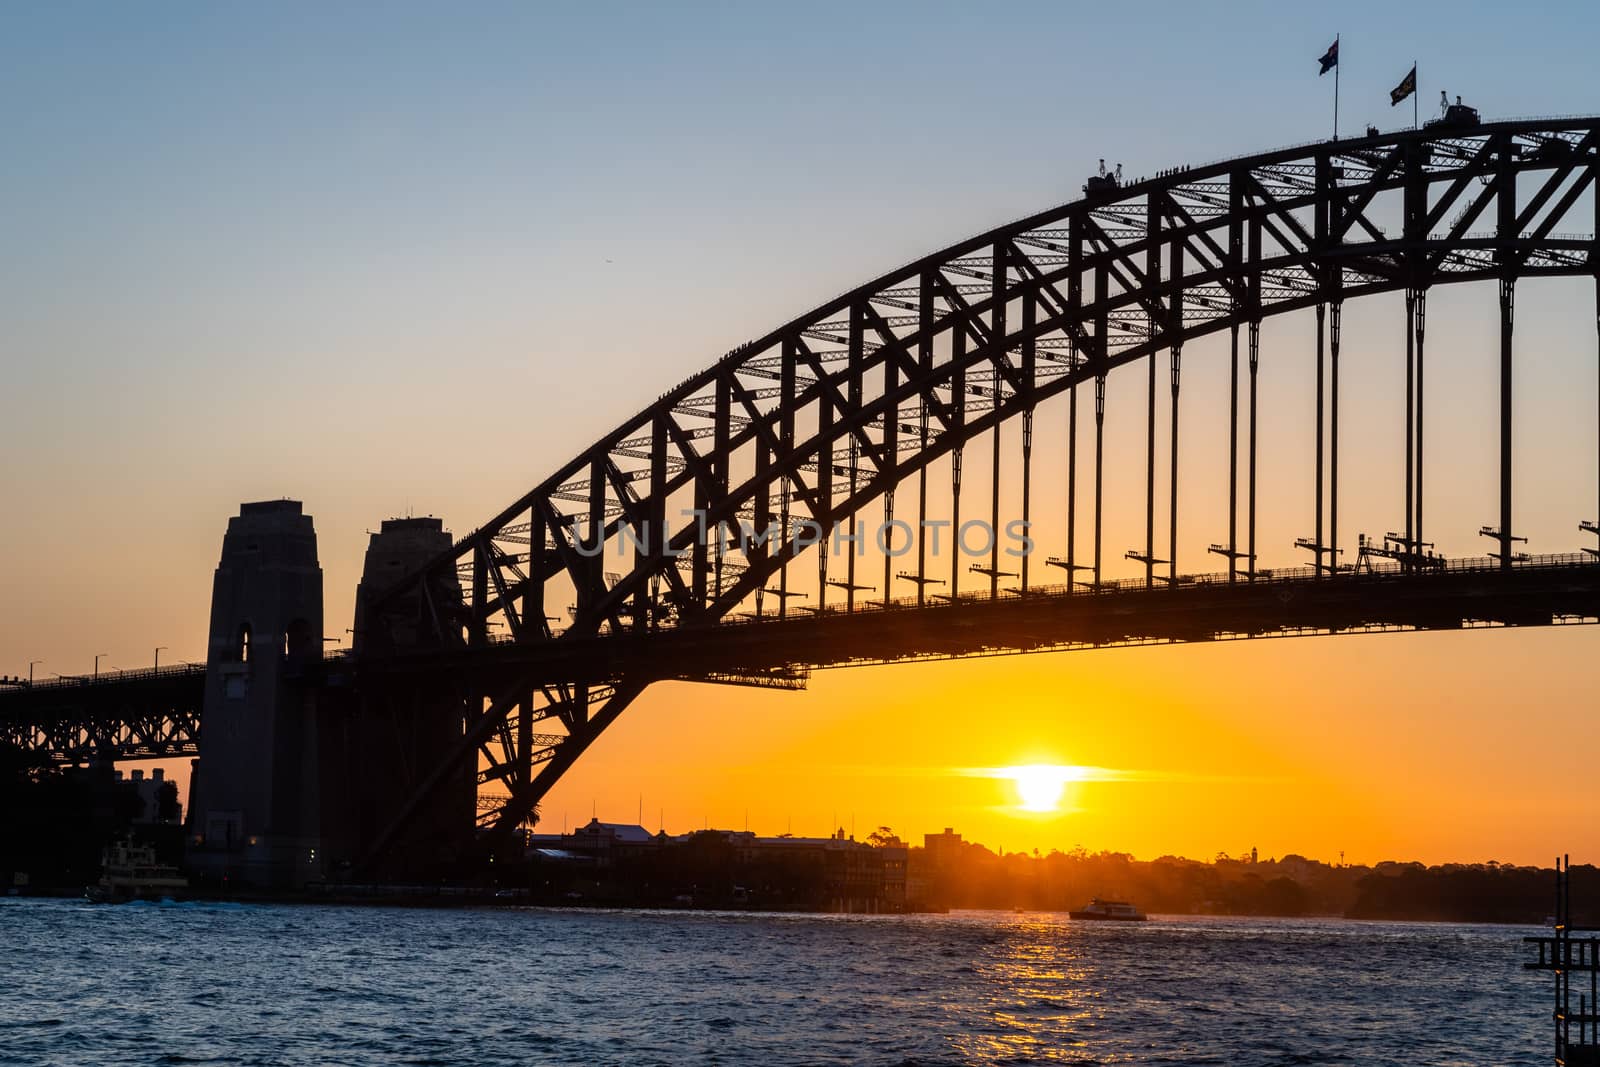 Backlight image of Harbour Bridge at sunset, Sydney, Australia